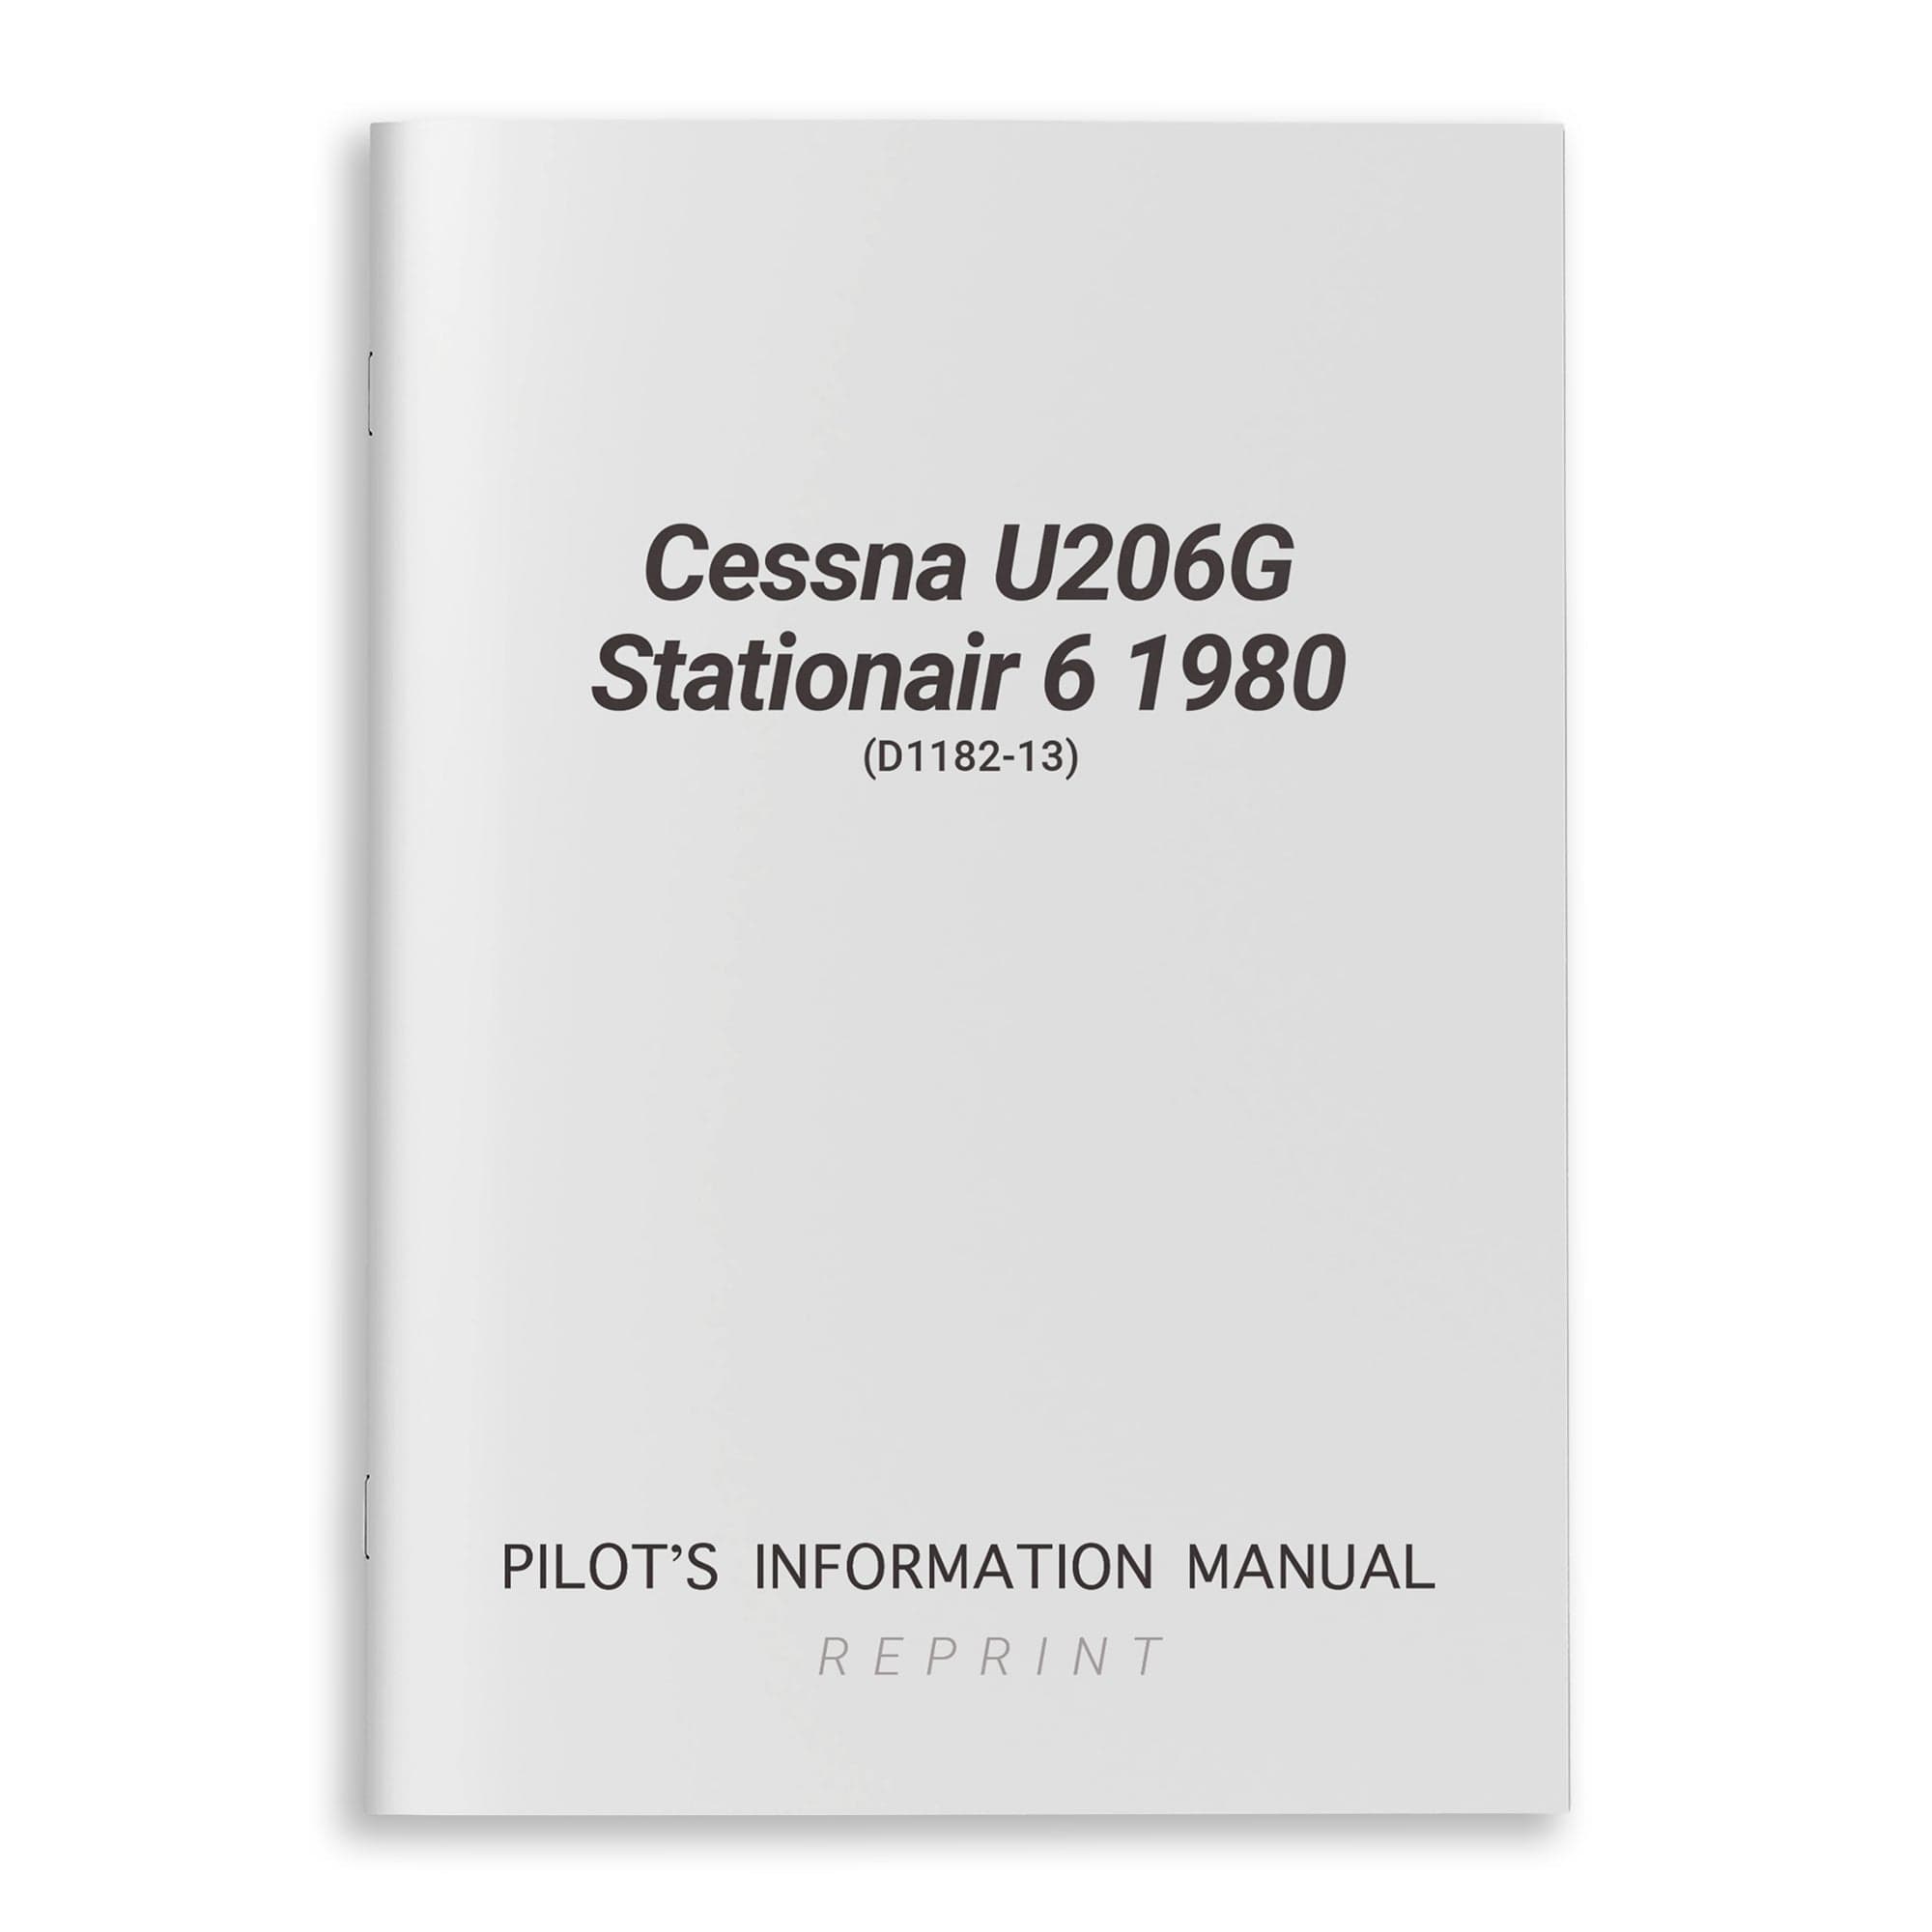 Cessna U206G Stationair 6 1980 Pilot's Information Manual (D1182-13)